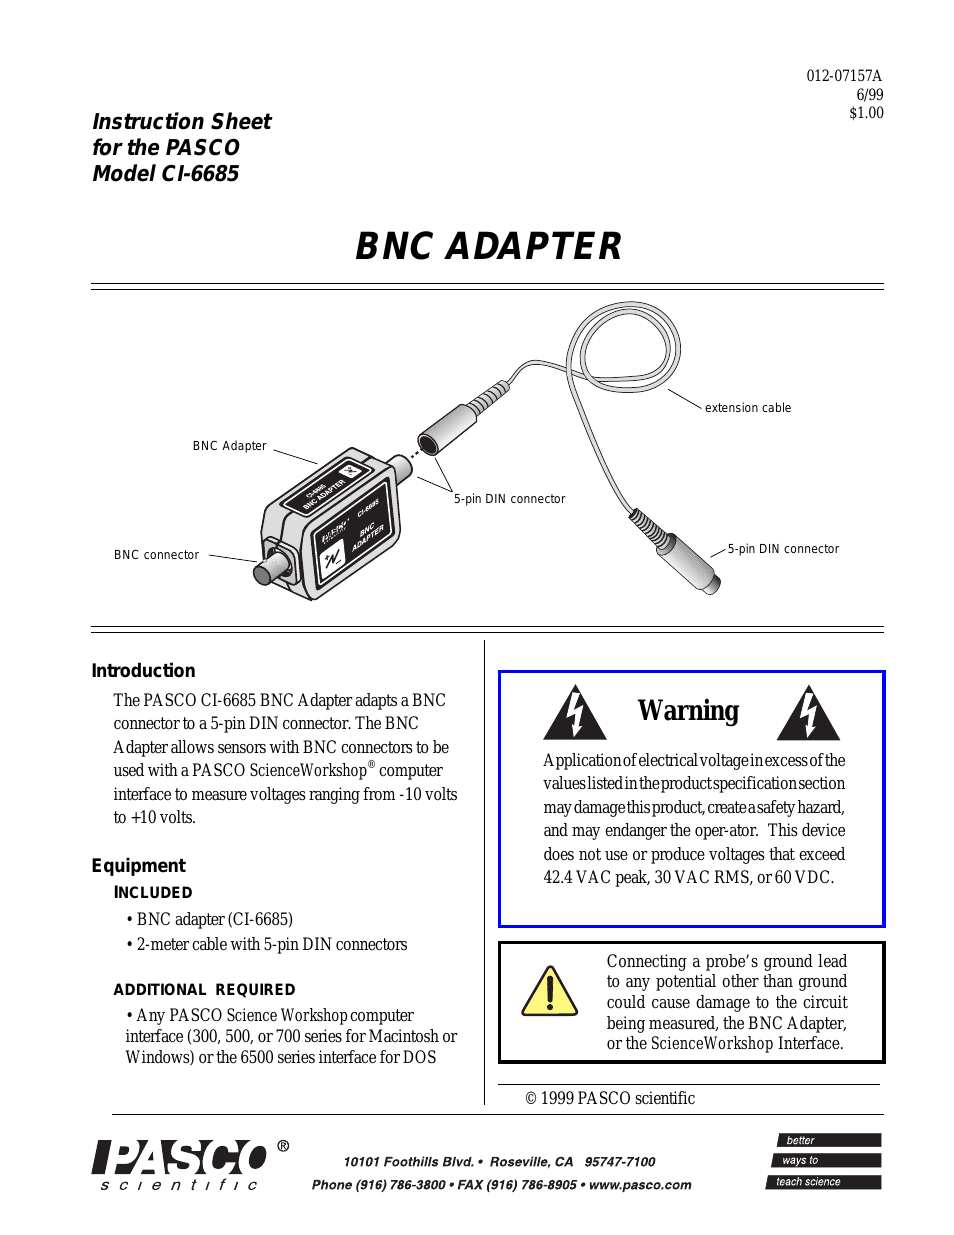 CI-6685 BNC ADAPTER